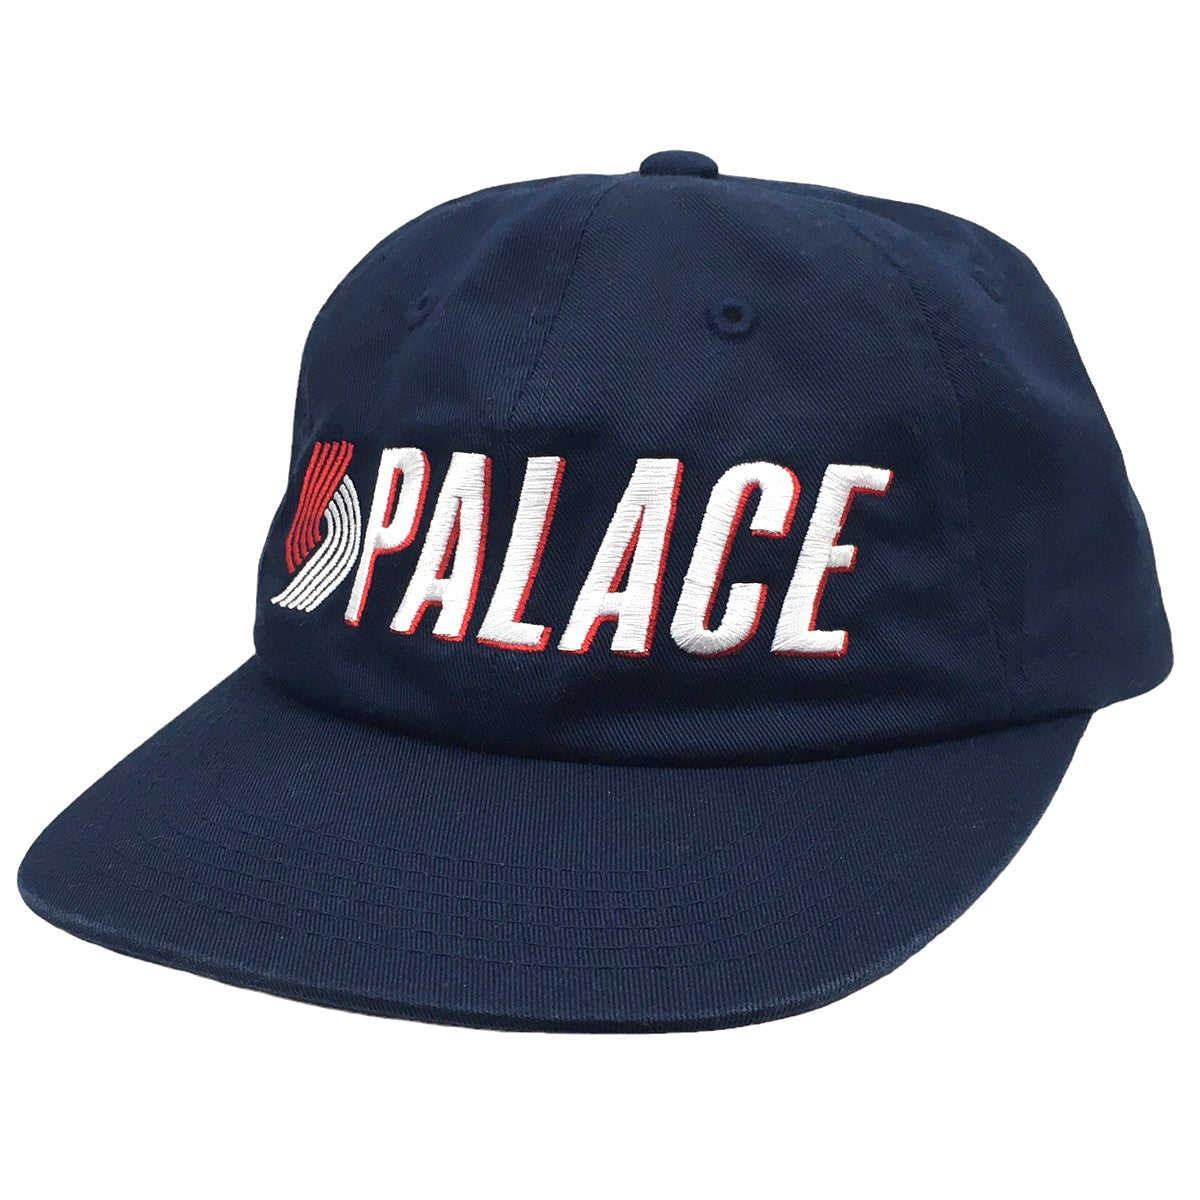 PALACE(パレス) BLAZERS 6-PANEL ロゴ キャップ 6パネル 帽子 ネイビー 